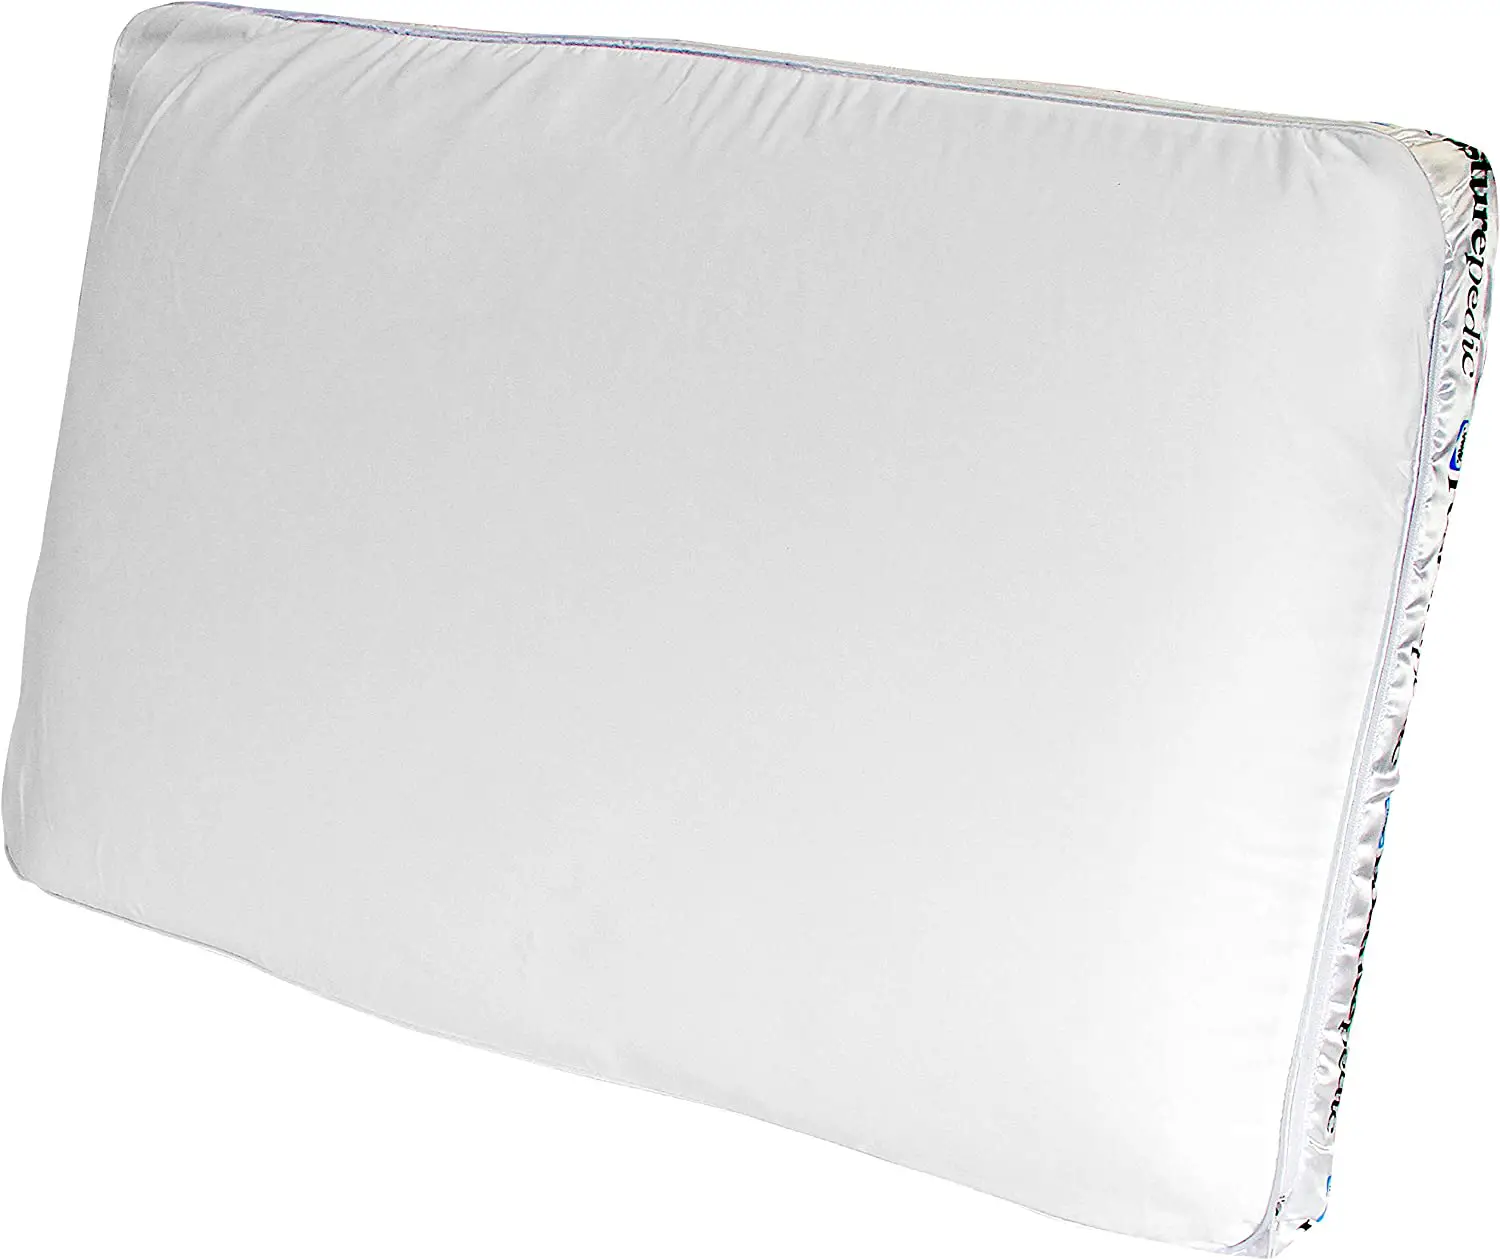 Amazon.com: Sealy Posturepedic Extra Firm Memory Foam Bed Pillow ...